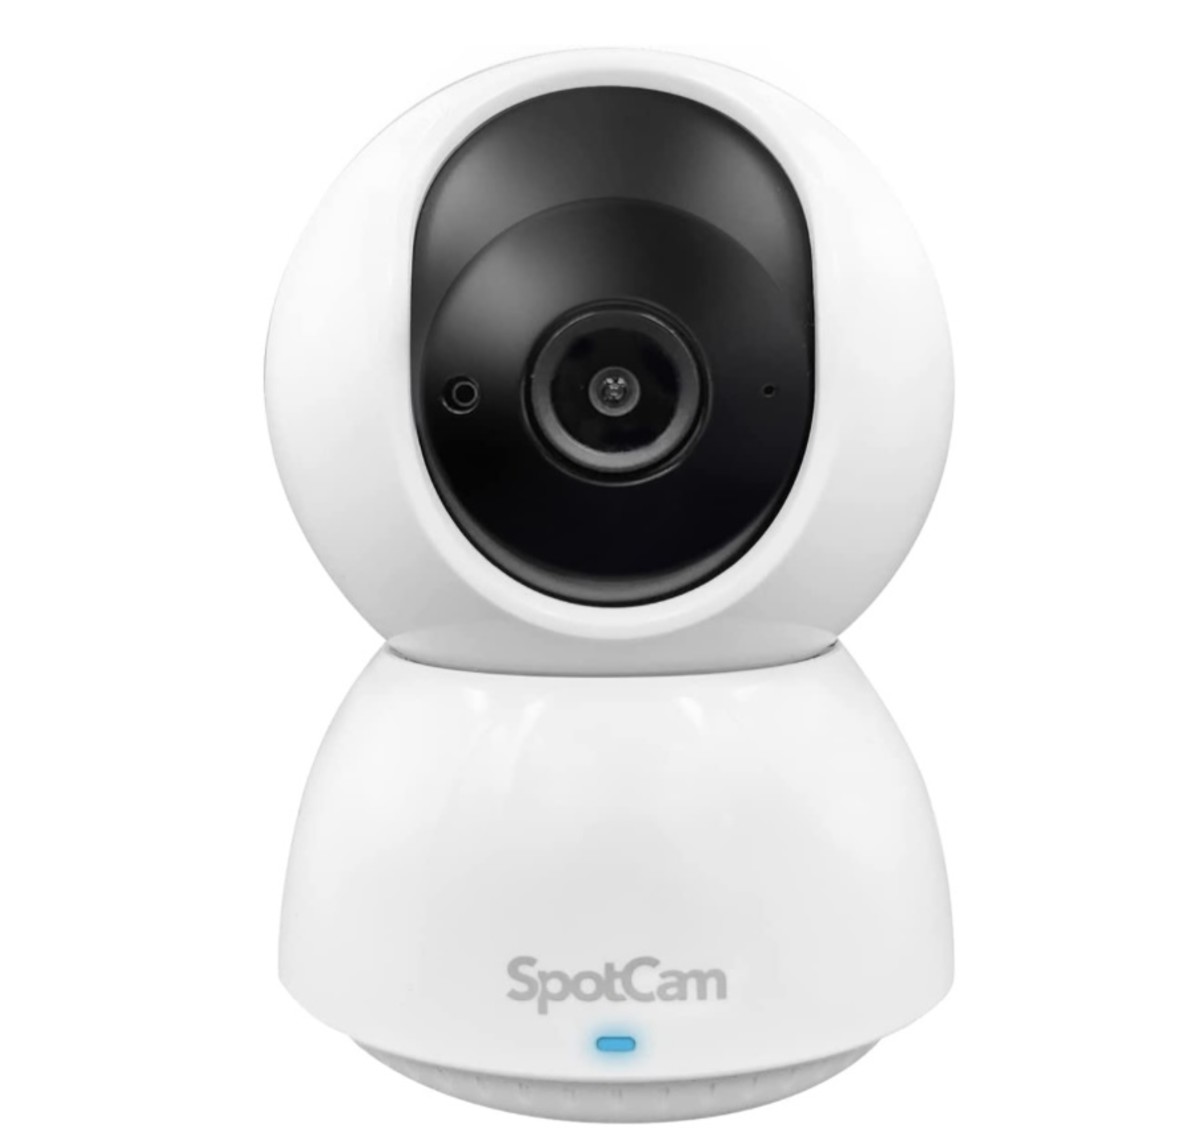 The SpotCam Eva Pro is a Pan/Tilt Cloud AI Camera